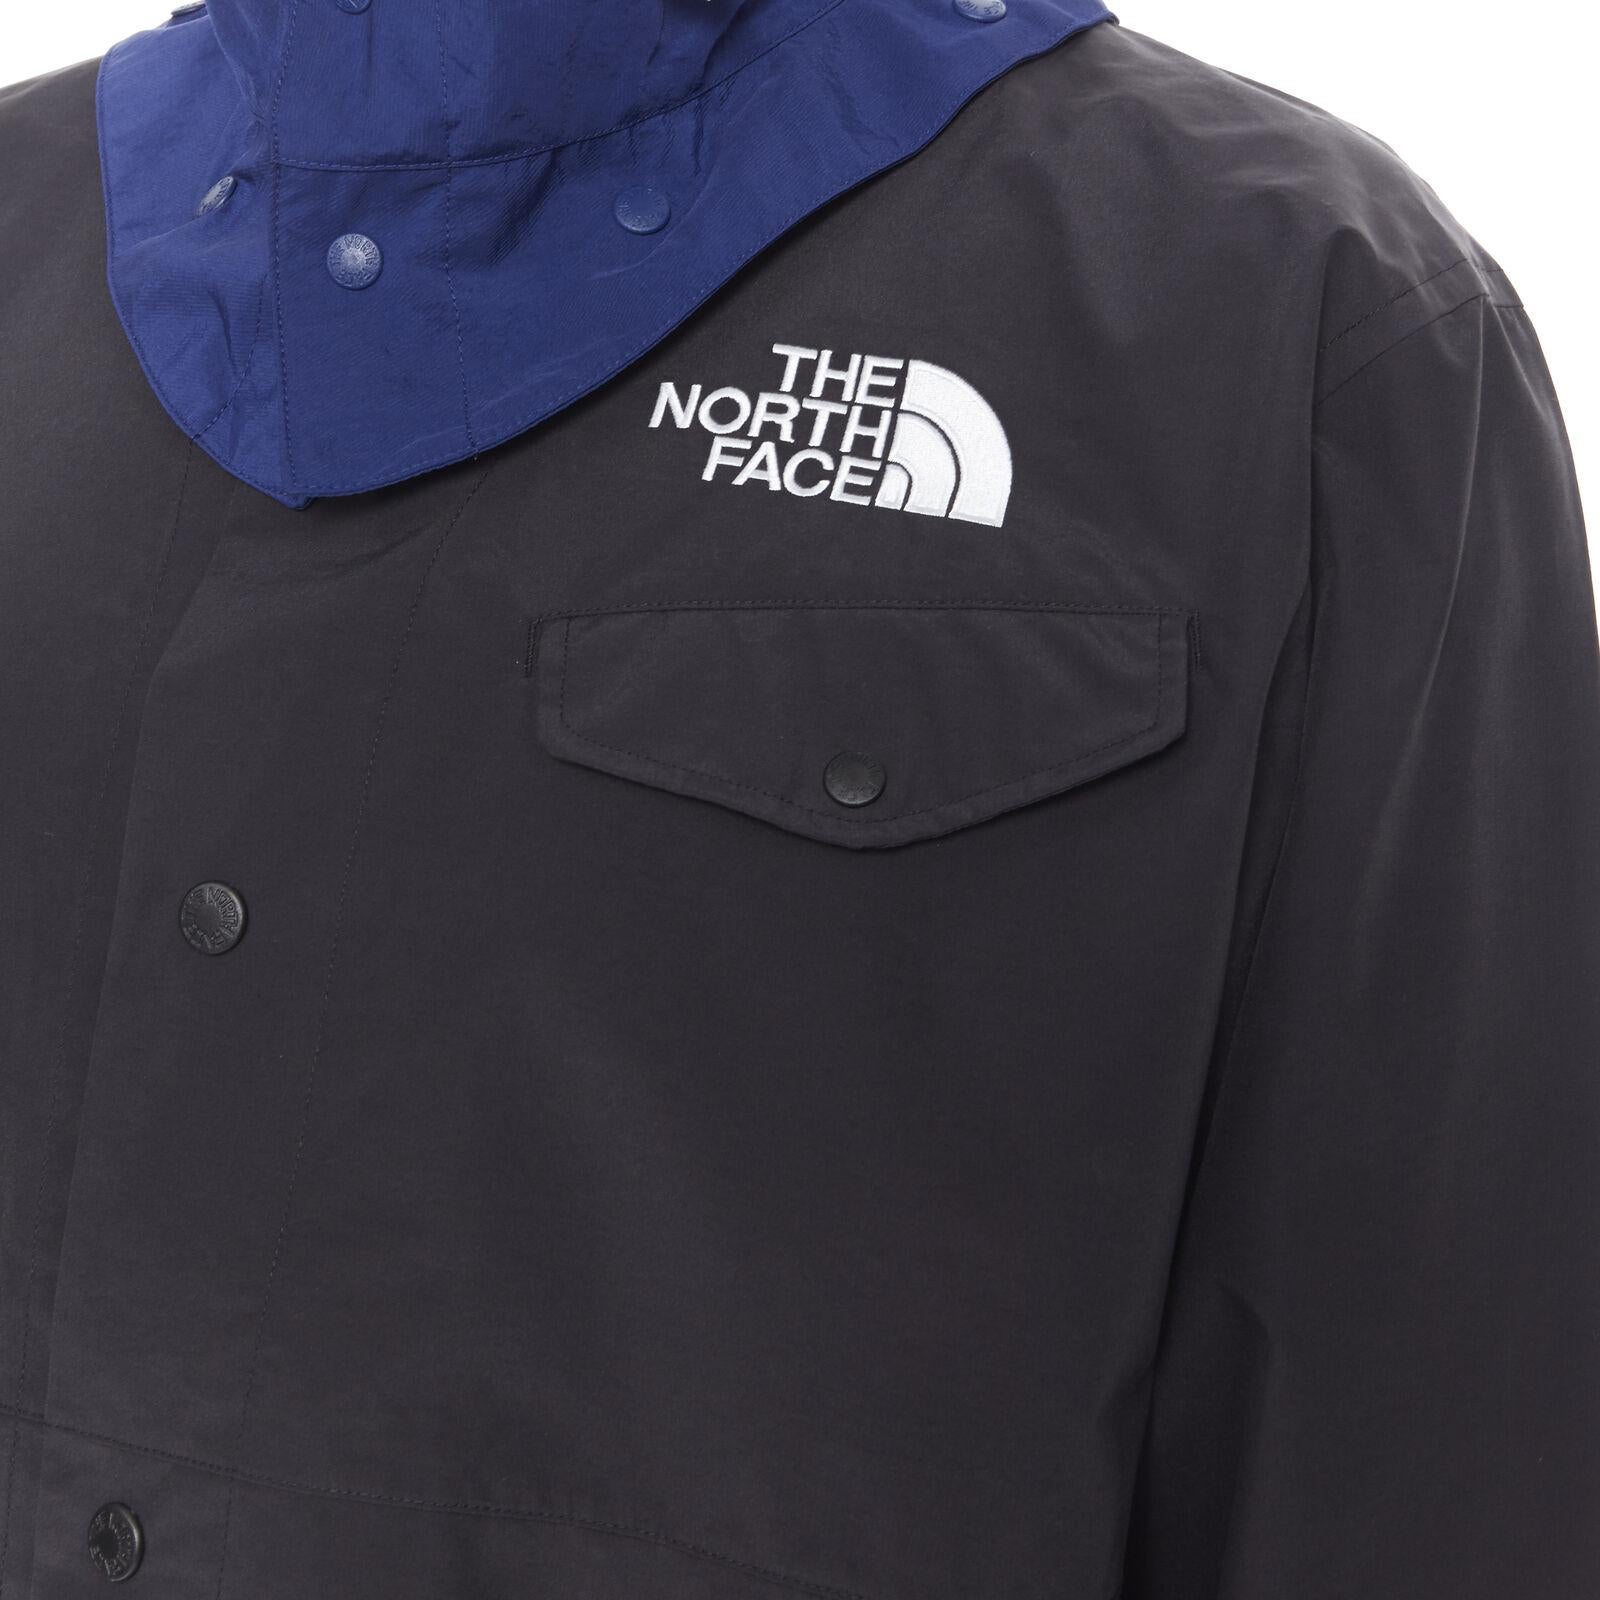 new THE NORTH FACE KAZUKI KURAISHI Black Series Charlie Duty Jacket Black Blue S For Sale 5